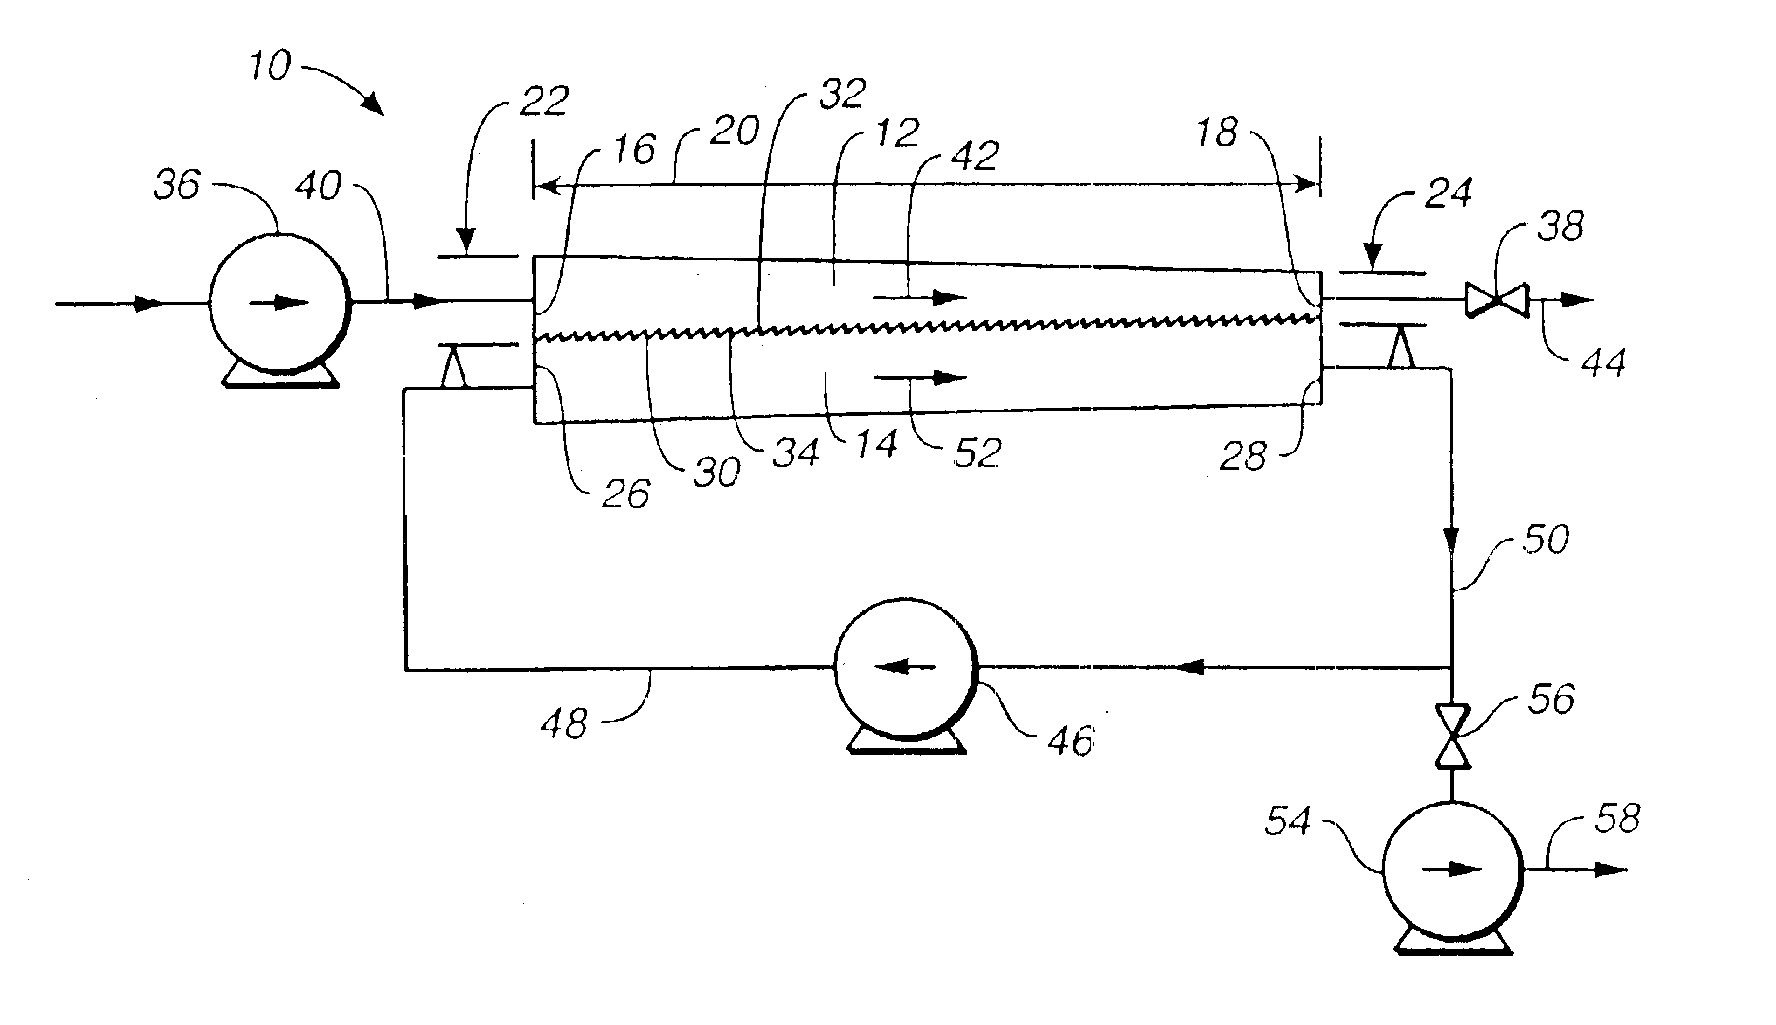 Tangential-flow filtration system